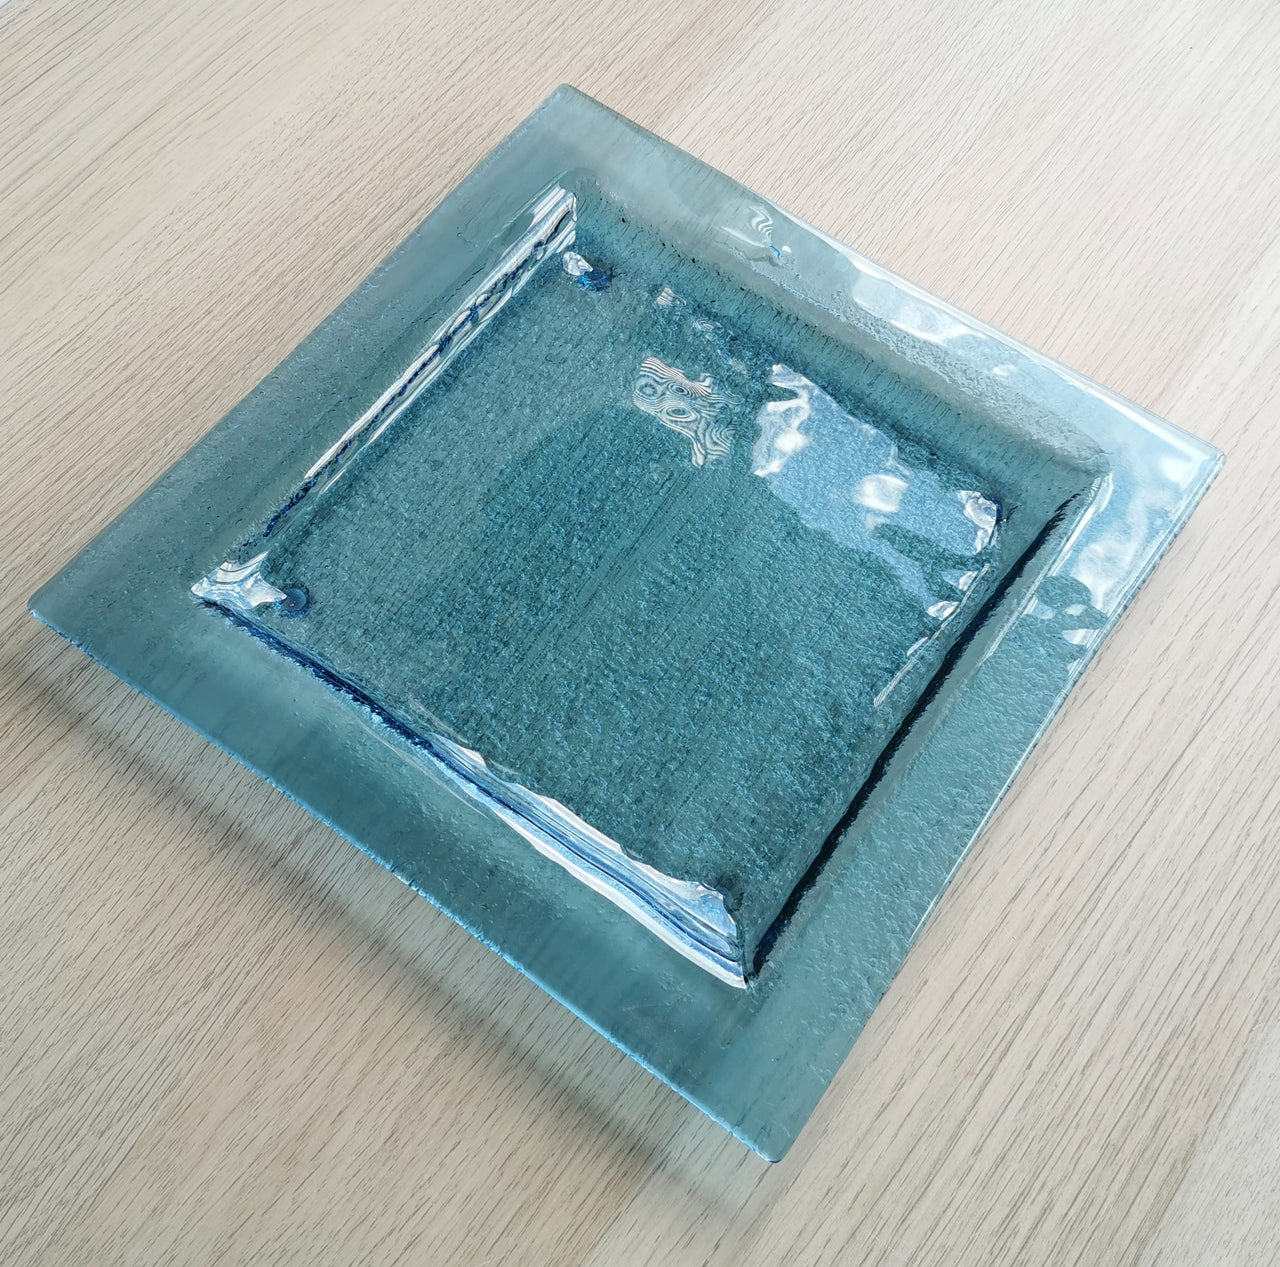 New York Minimalist Blue Glass Dessert Plate. Sky Blue Glass Plate - 9 5/8"x9 5/8" (24,5cm.x24,5cm.)